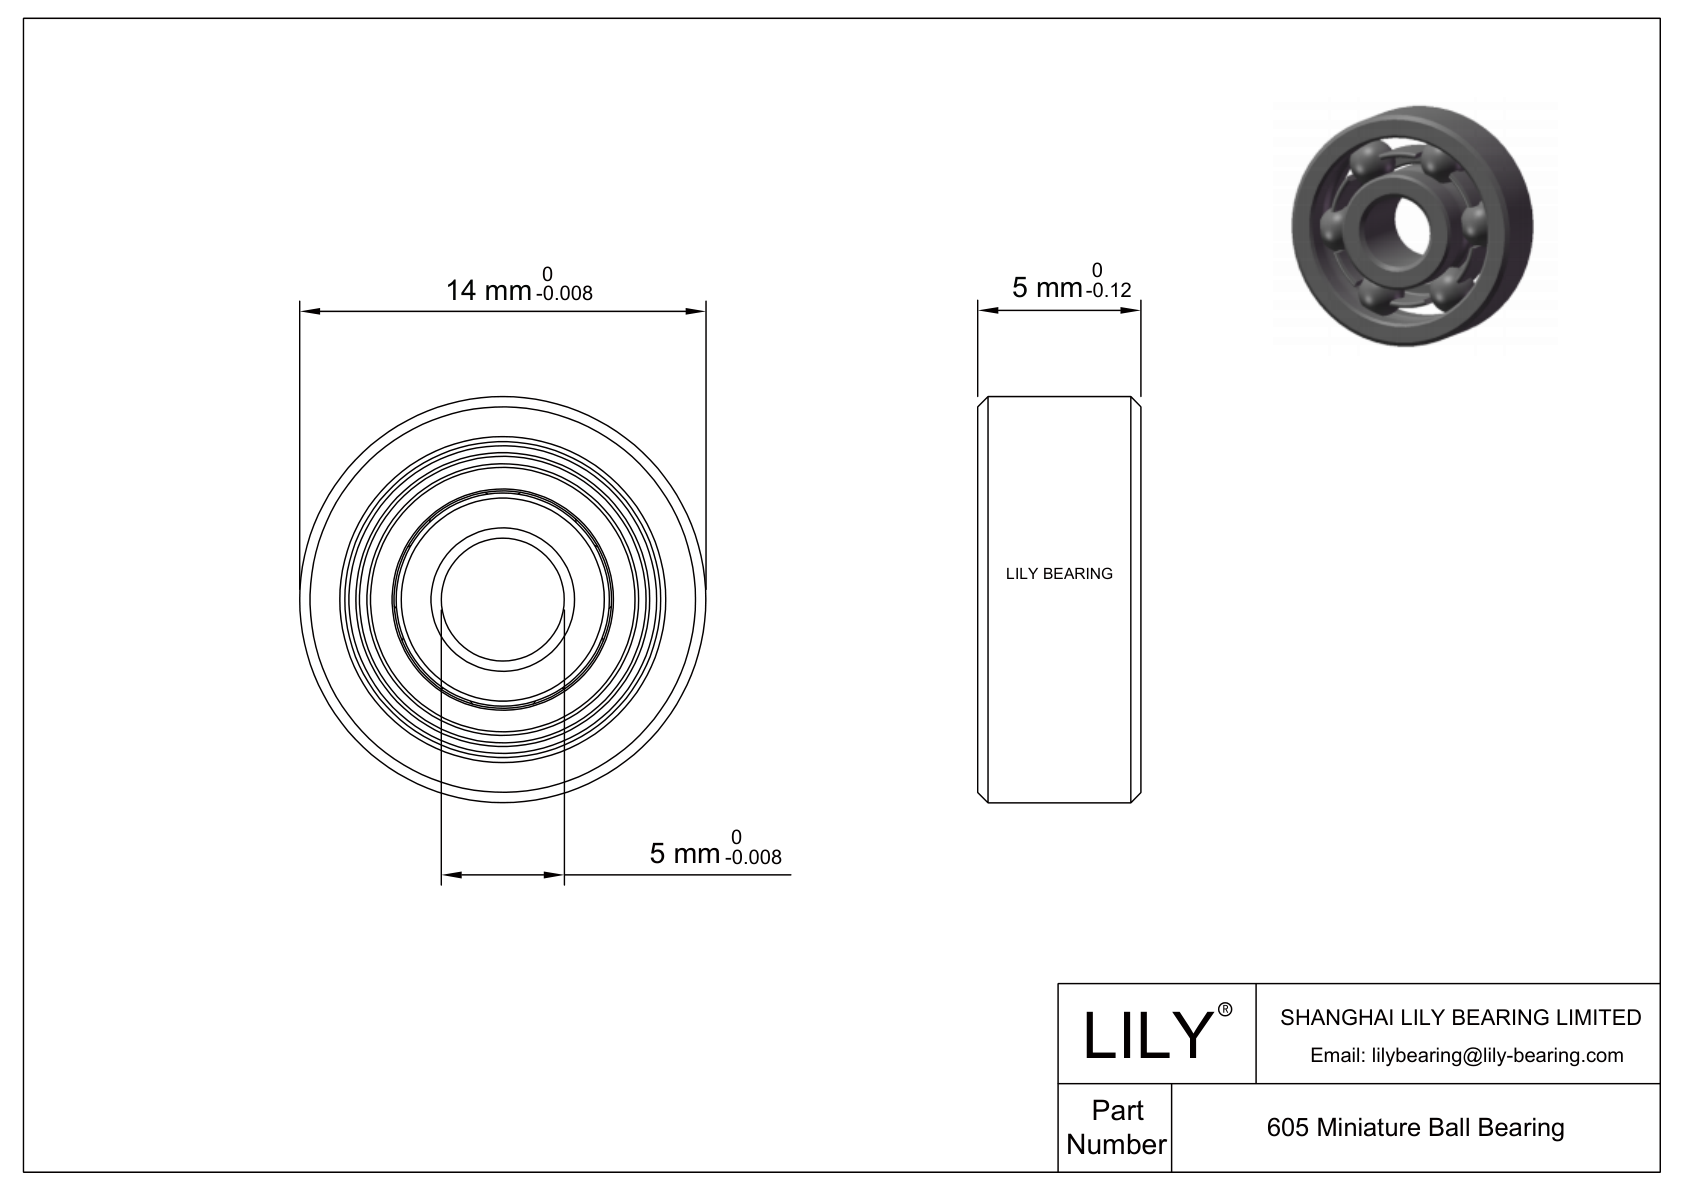 LILY-PU60521-8 Polyurethane Coated Bearing cad drawing